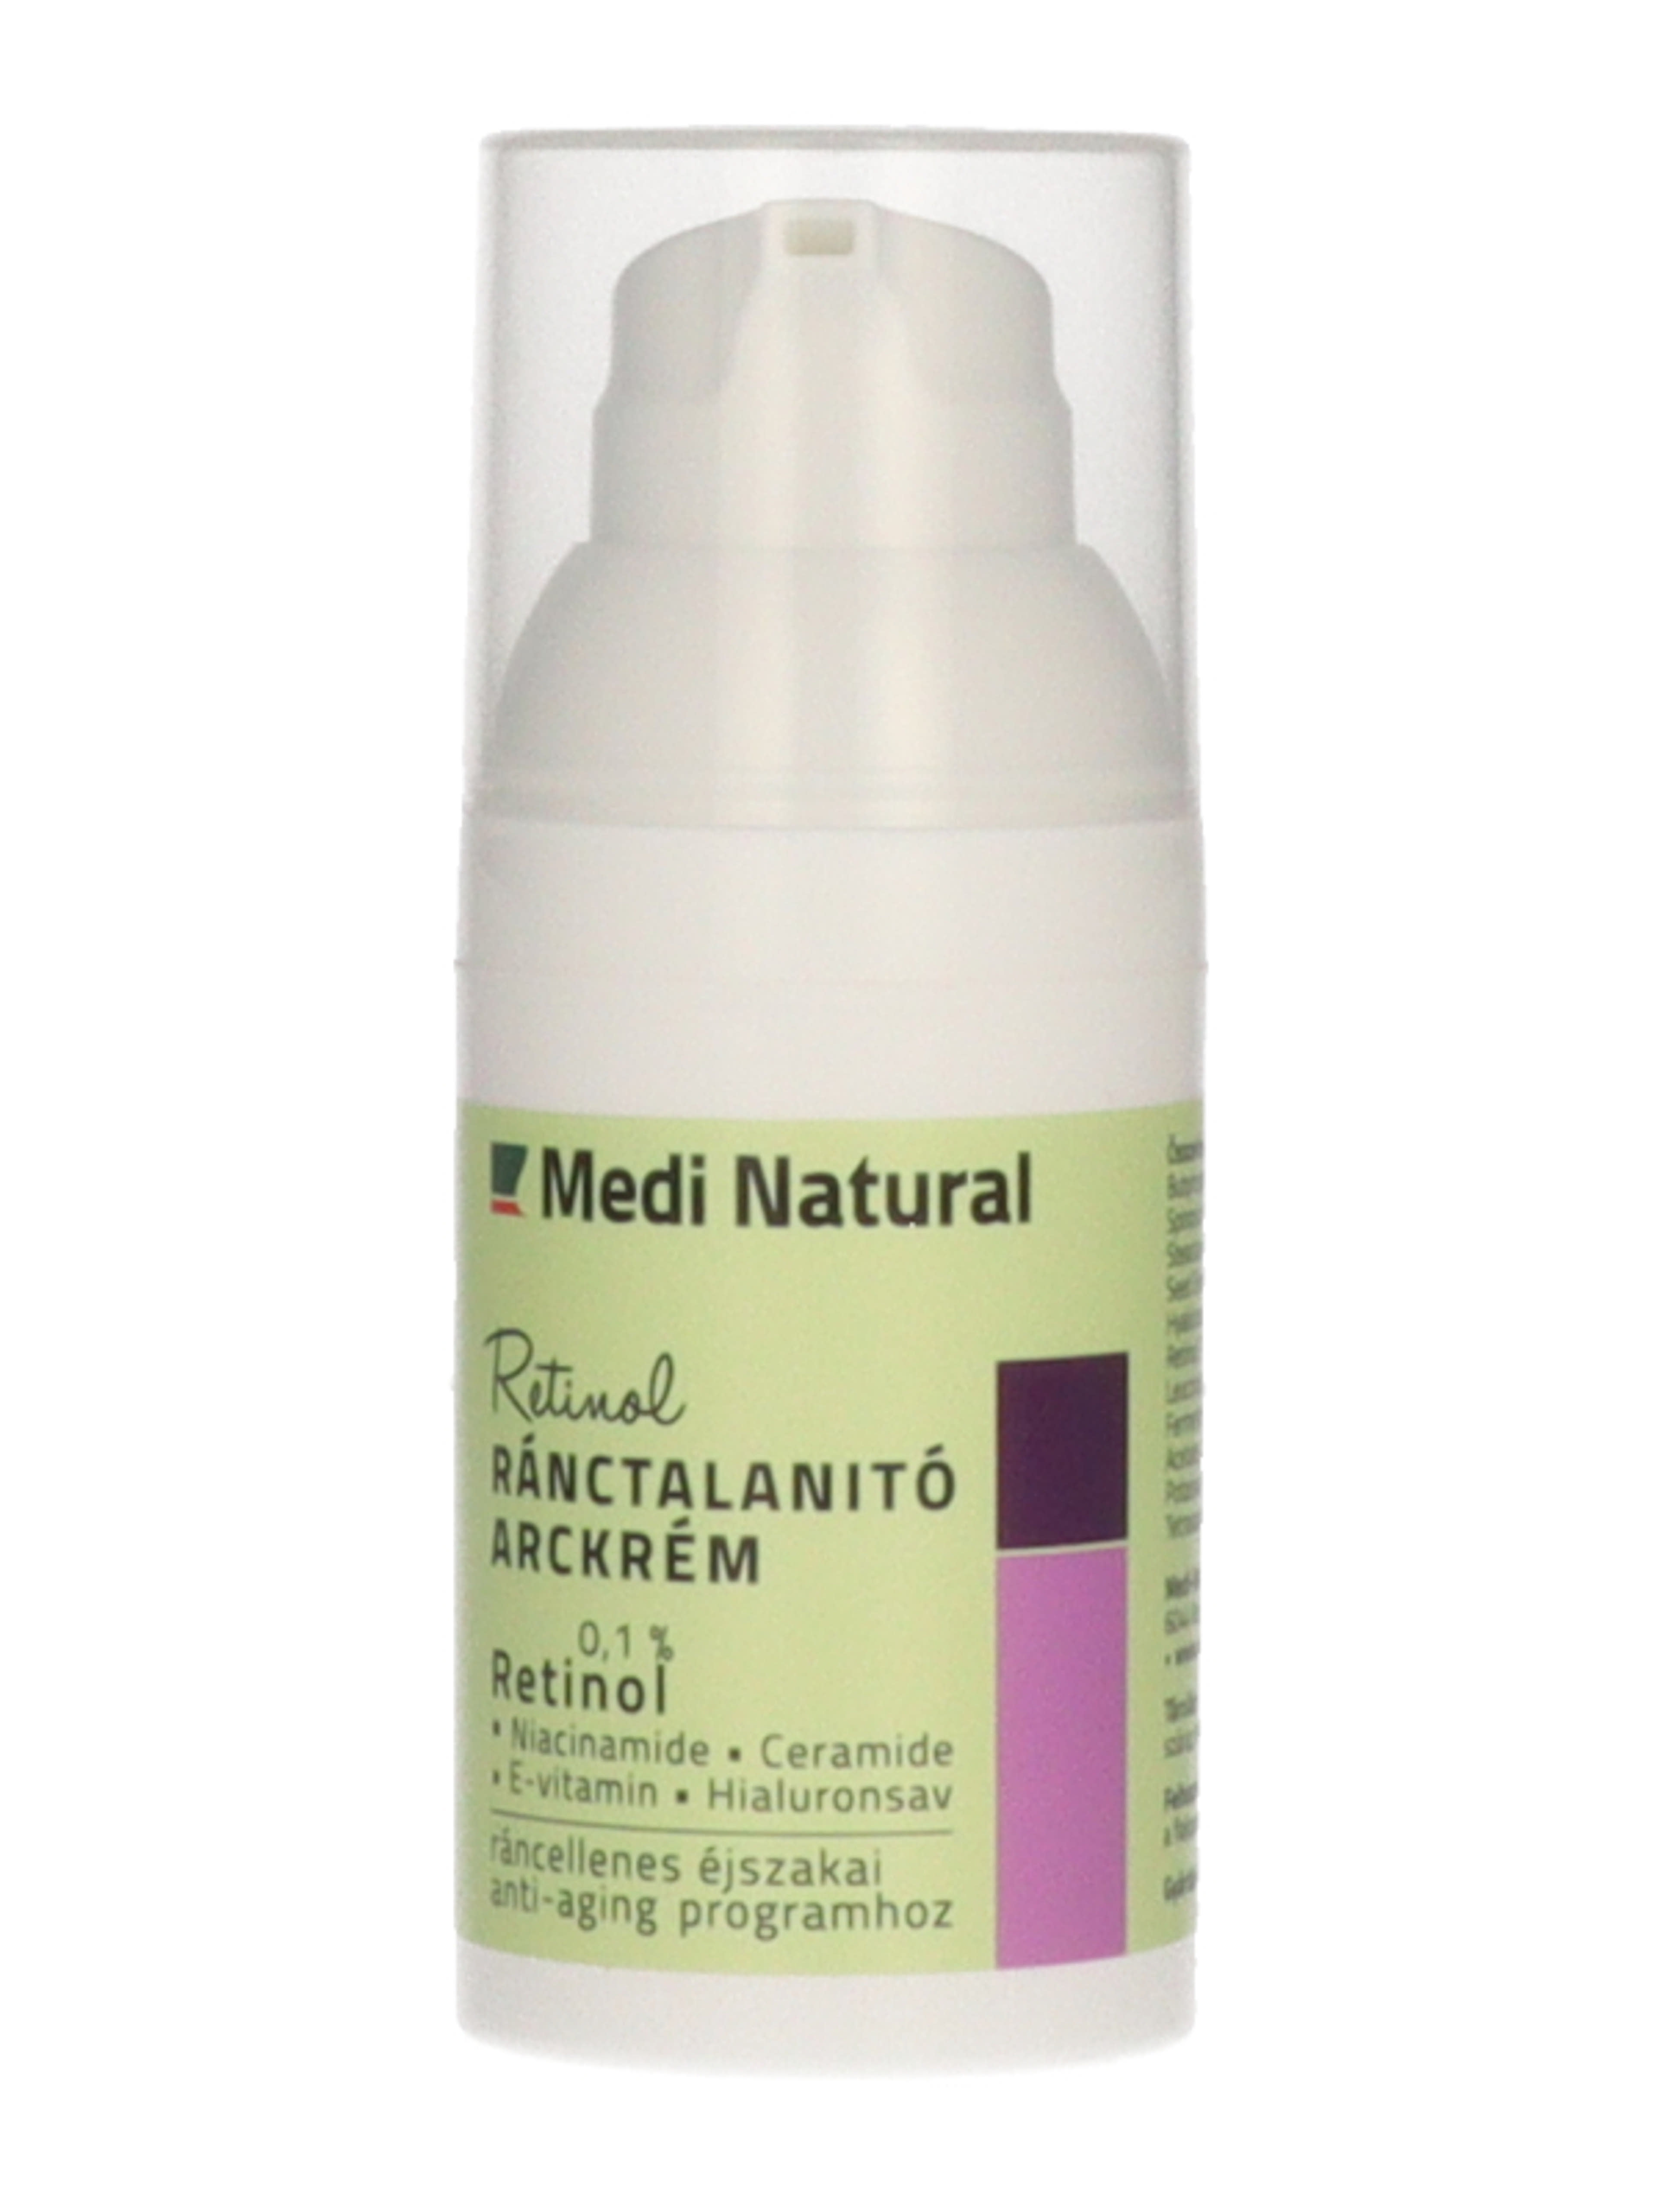 Medi Natural Retinol 0,1% ránctalanító arckrém - 30 ml